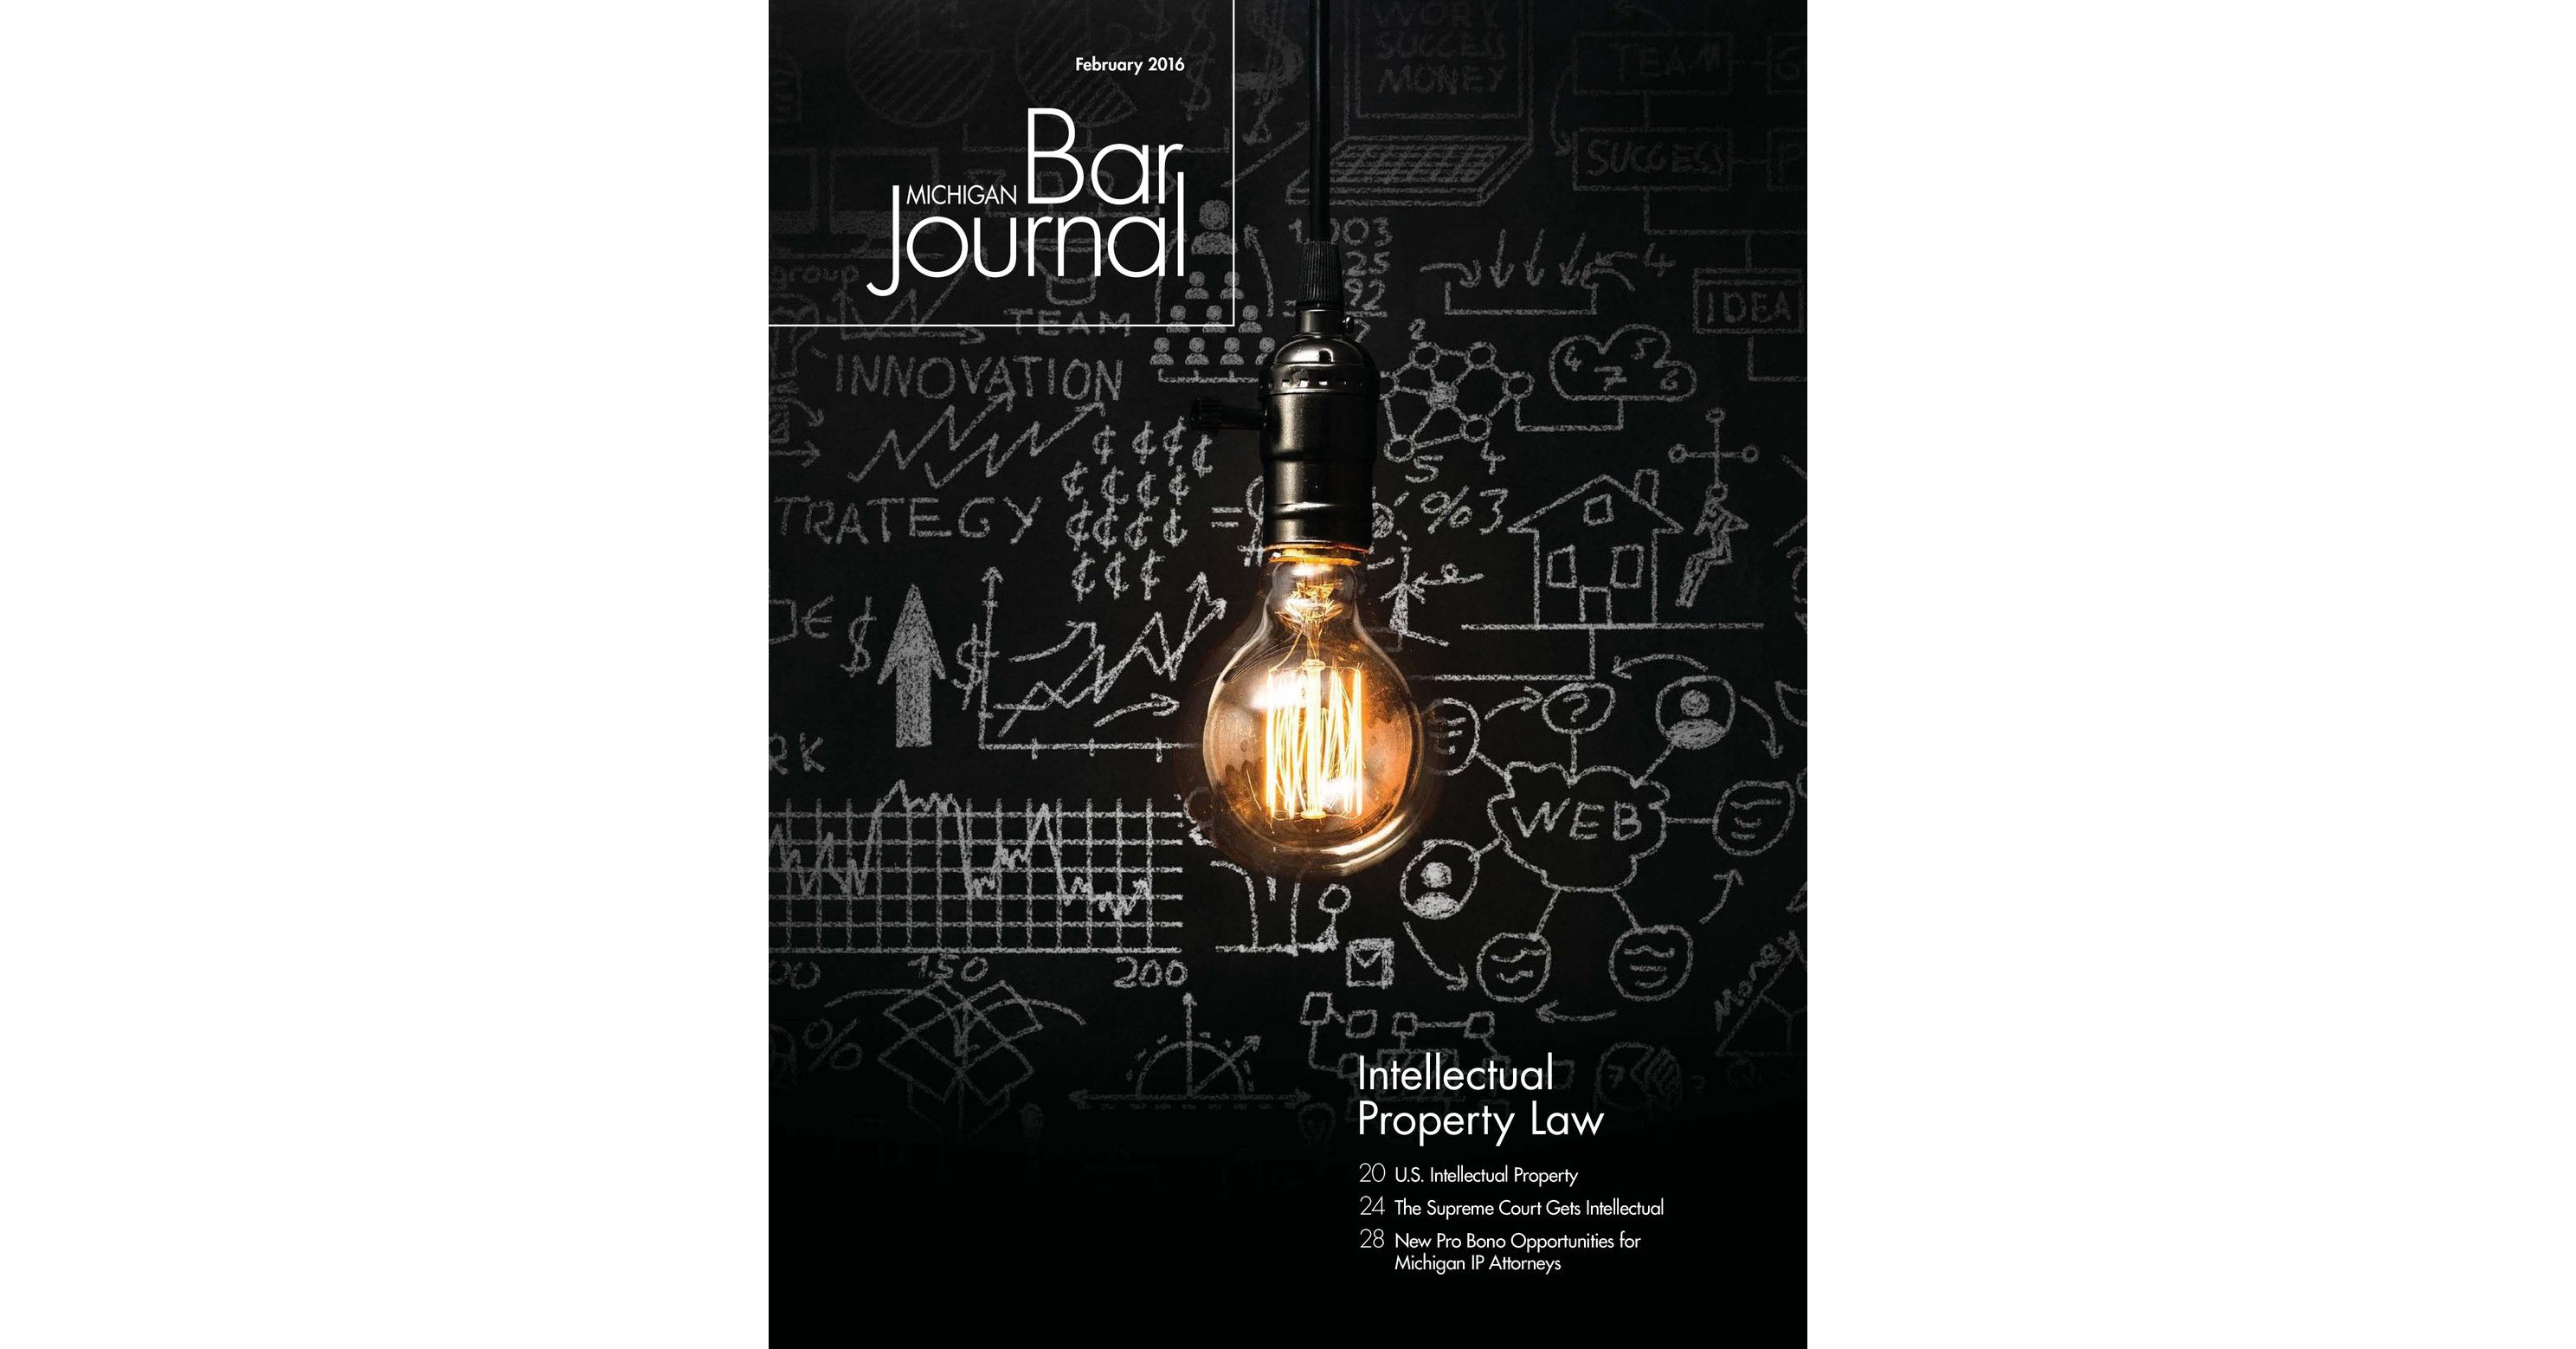 Michigan Bar Journal February 2016